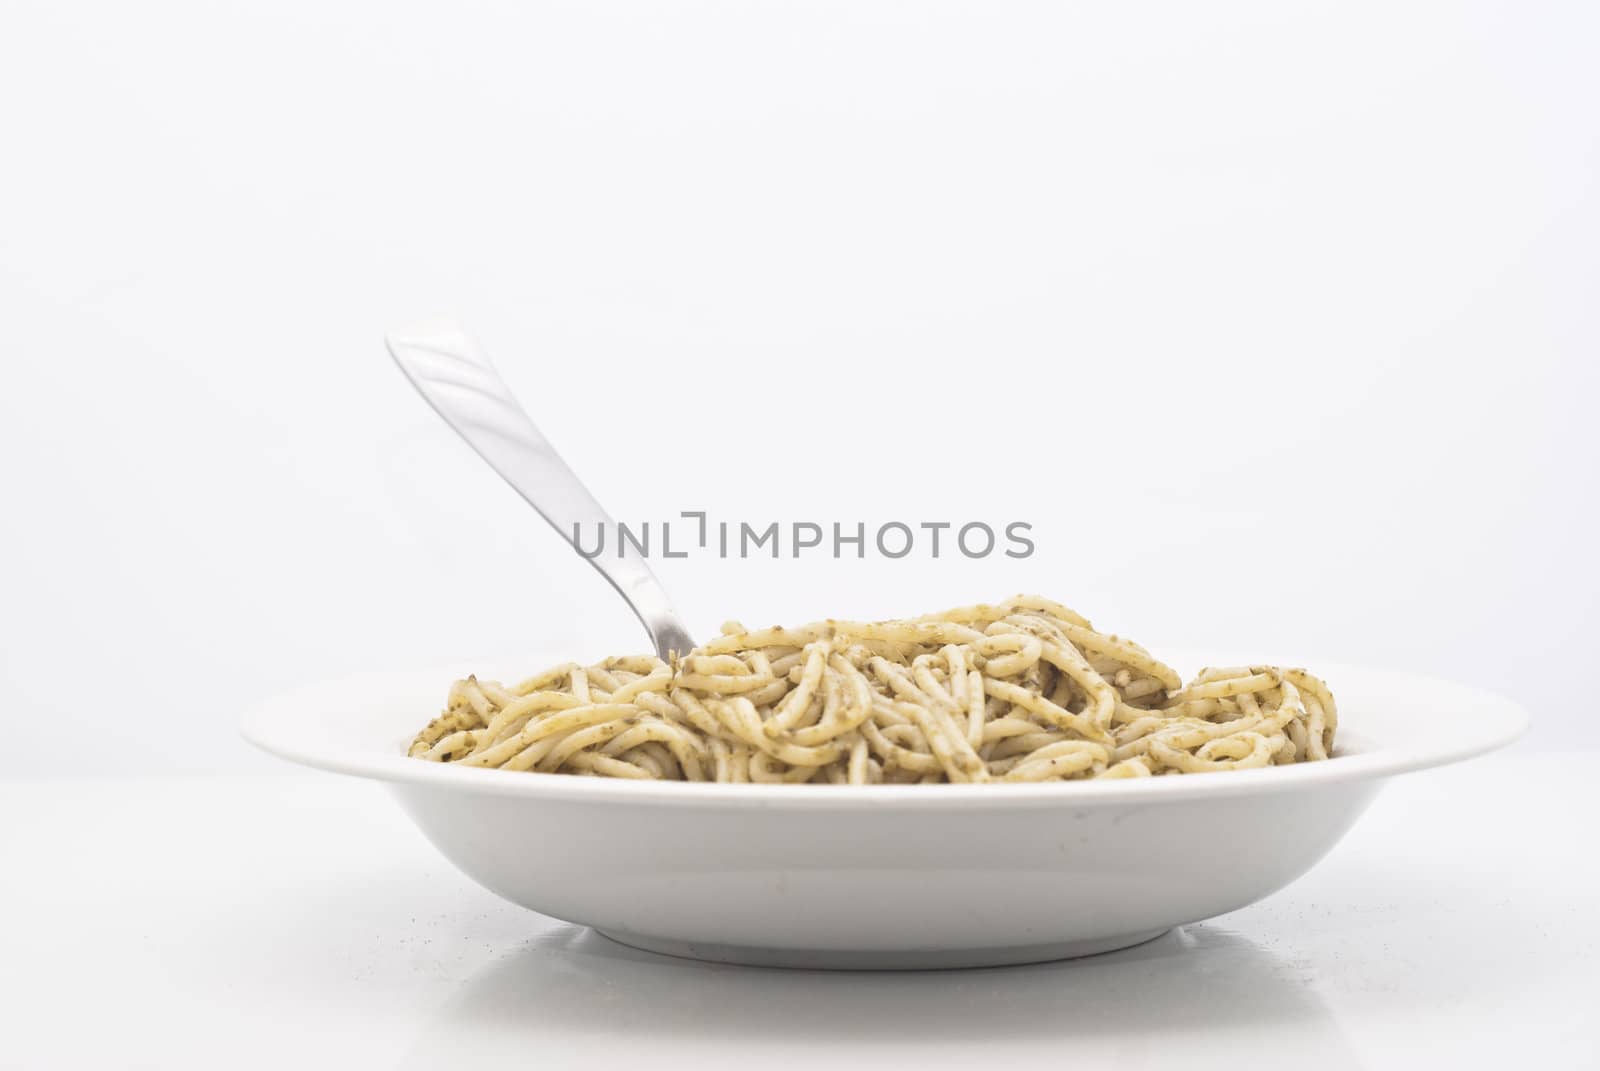 Spaghetti with pesto isolated on white background